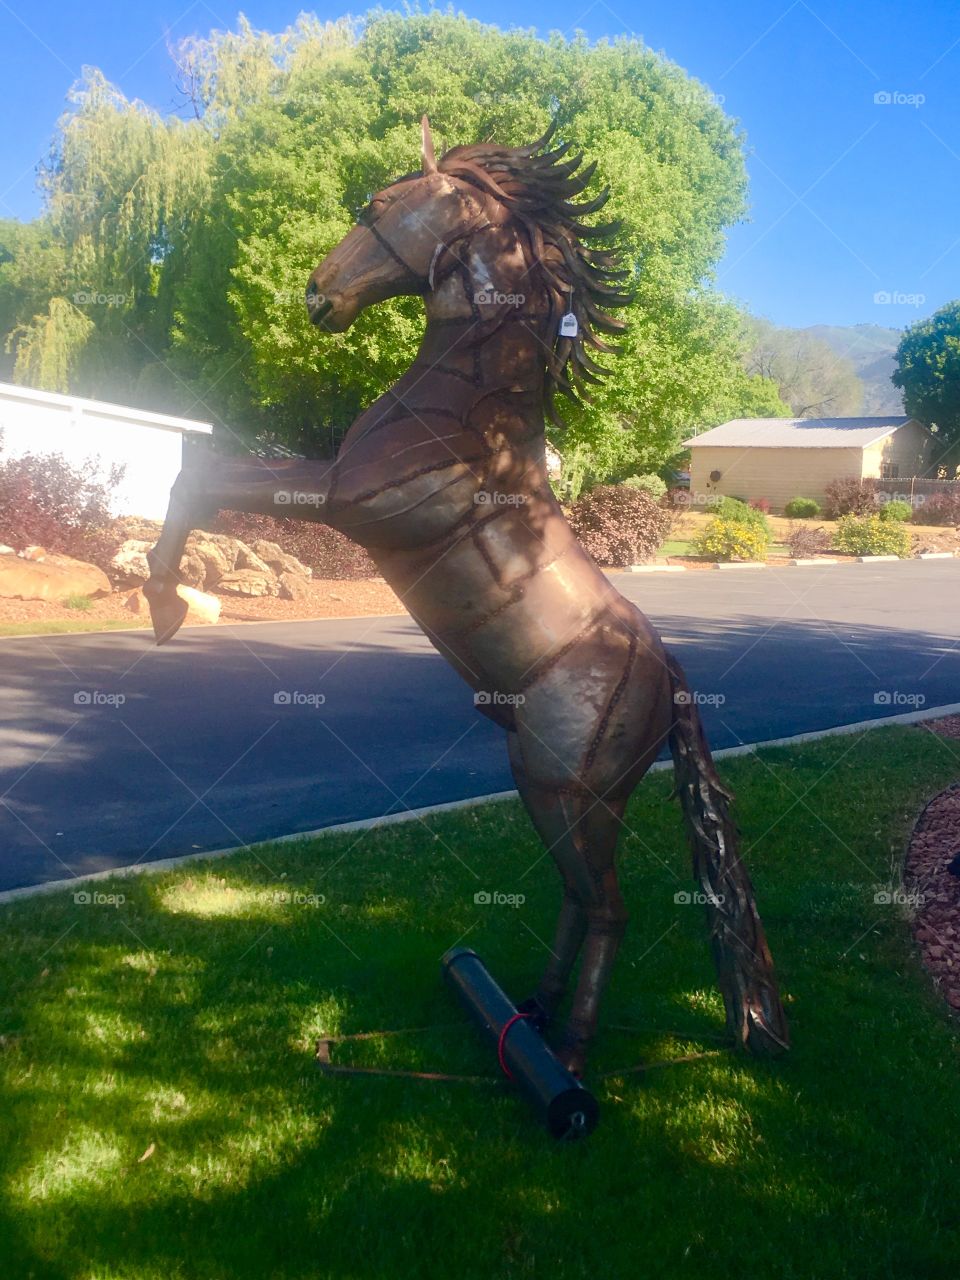 Cool horse statute